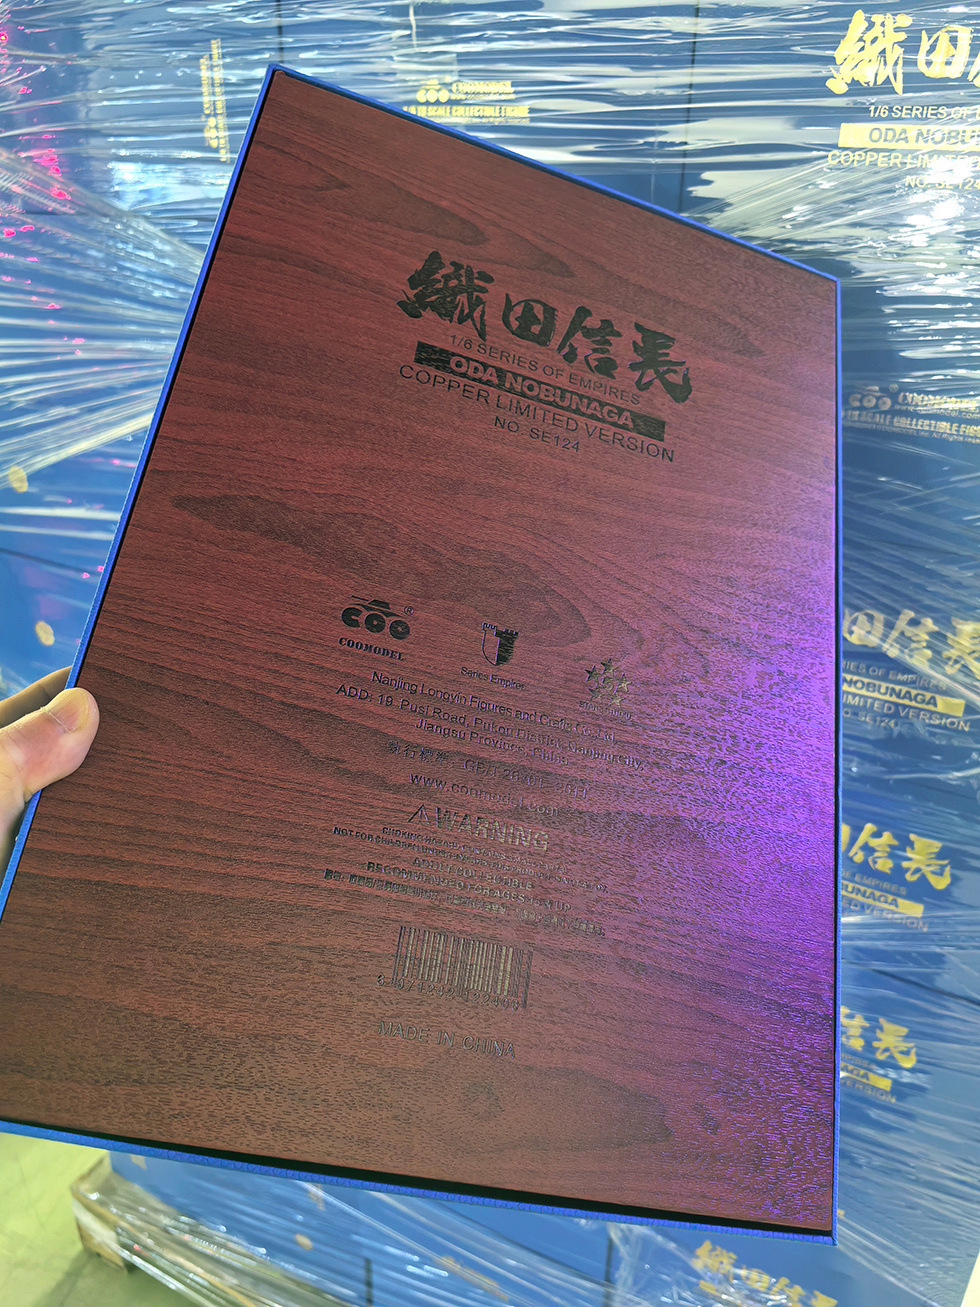 japanese - NEW PRODUCT: COOMODEL: 1/6 Empire Series - Oda Nobunaga Samurai Edition/Hunting Edition/Pure Copper Standard Edition/Pure Copper Limited Collection Edition #SE124 B6b66012